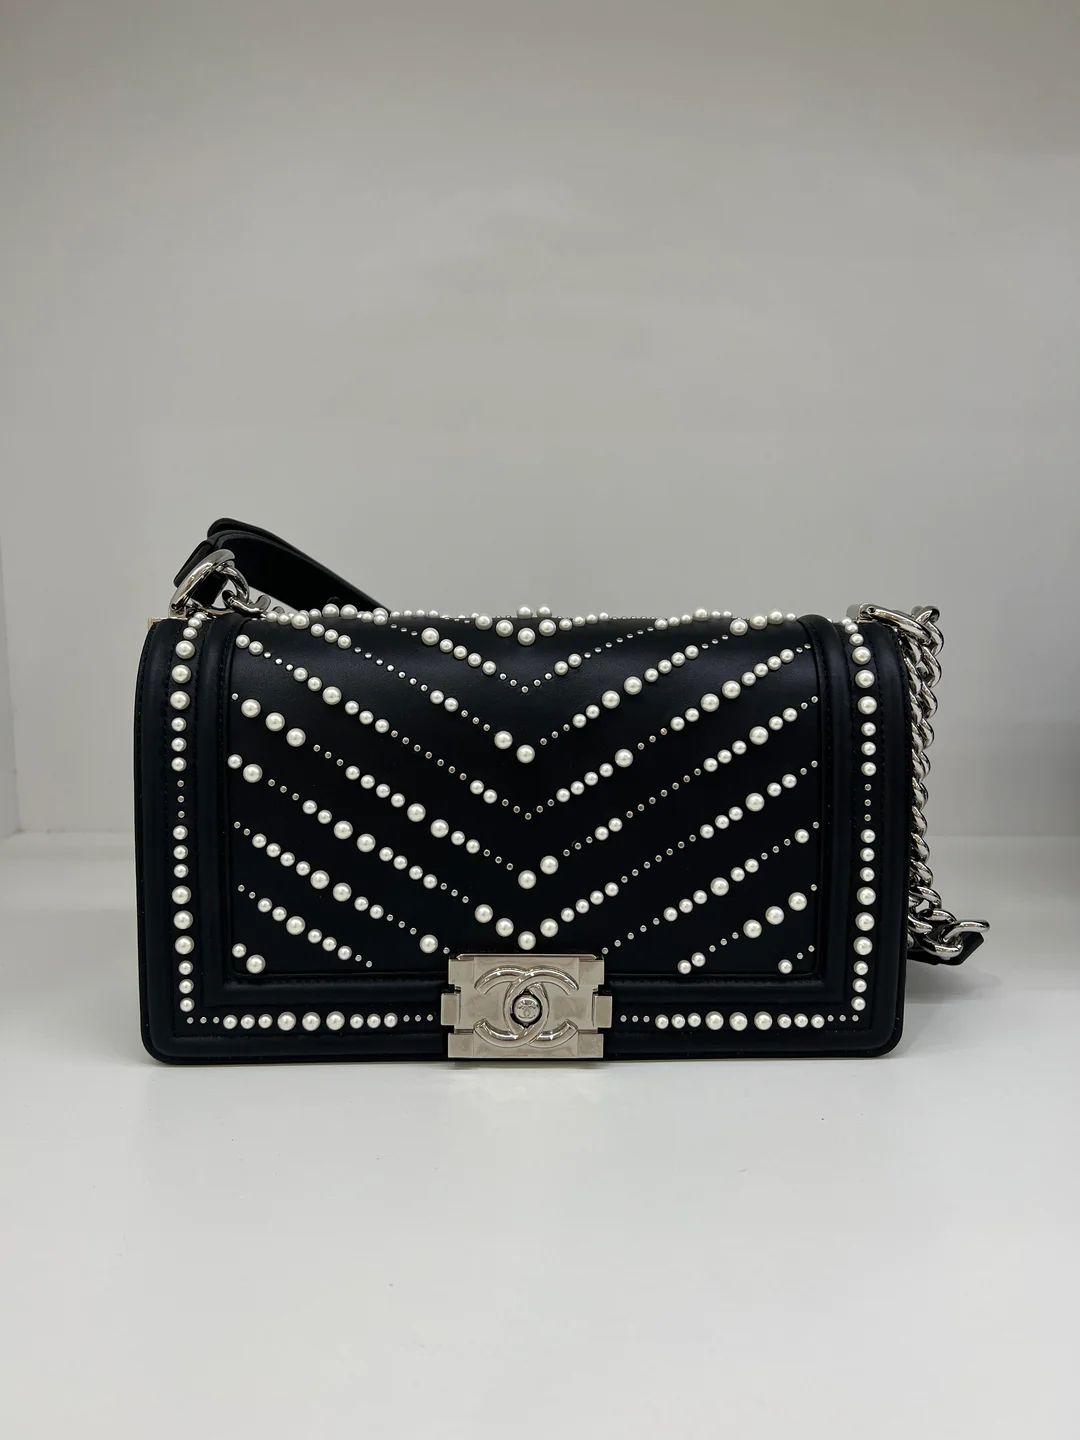 Chanel Medium Boy Bag - Black with Pearl Detail 6